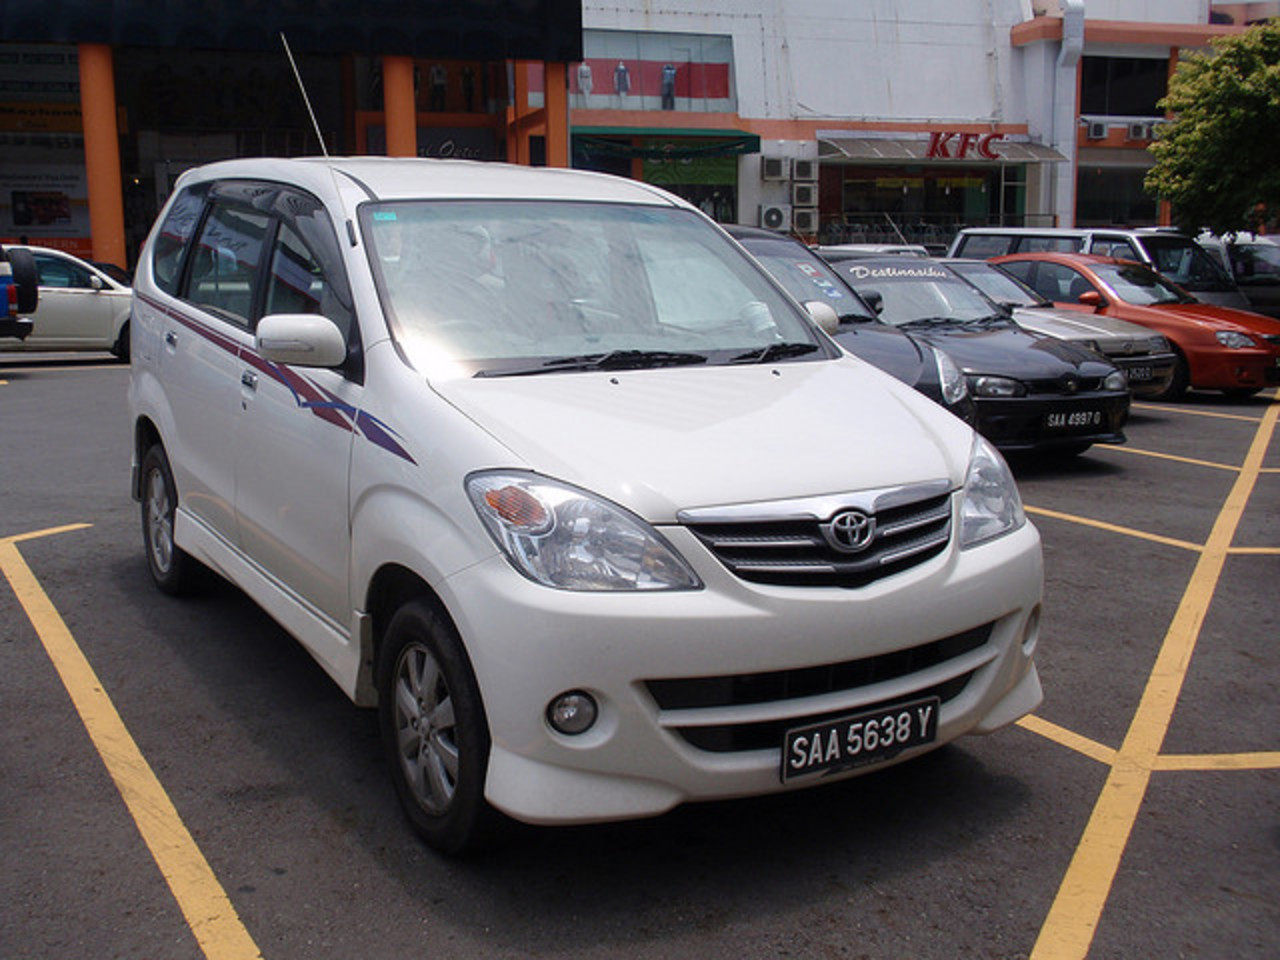 Facelifted Toyota Avanza At Kota Kinabalu | Flickr - Photo Sharing!